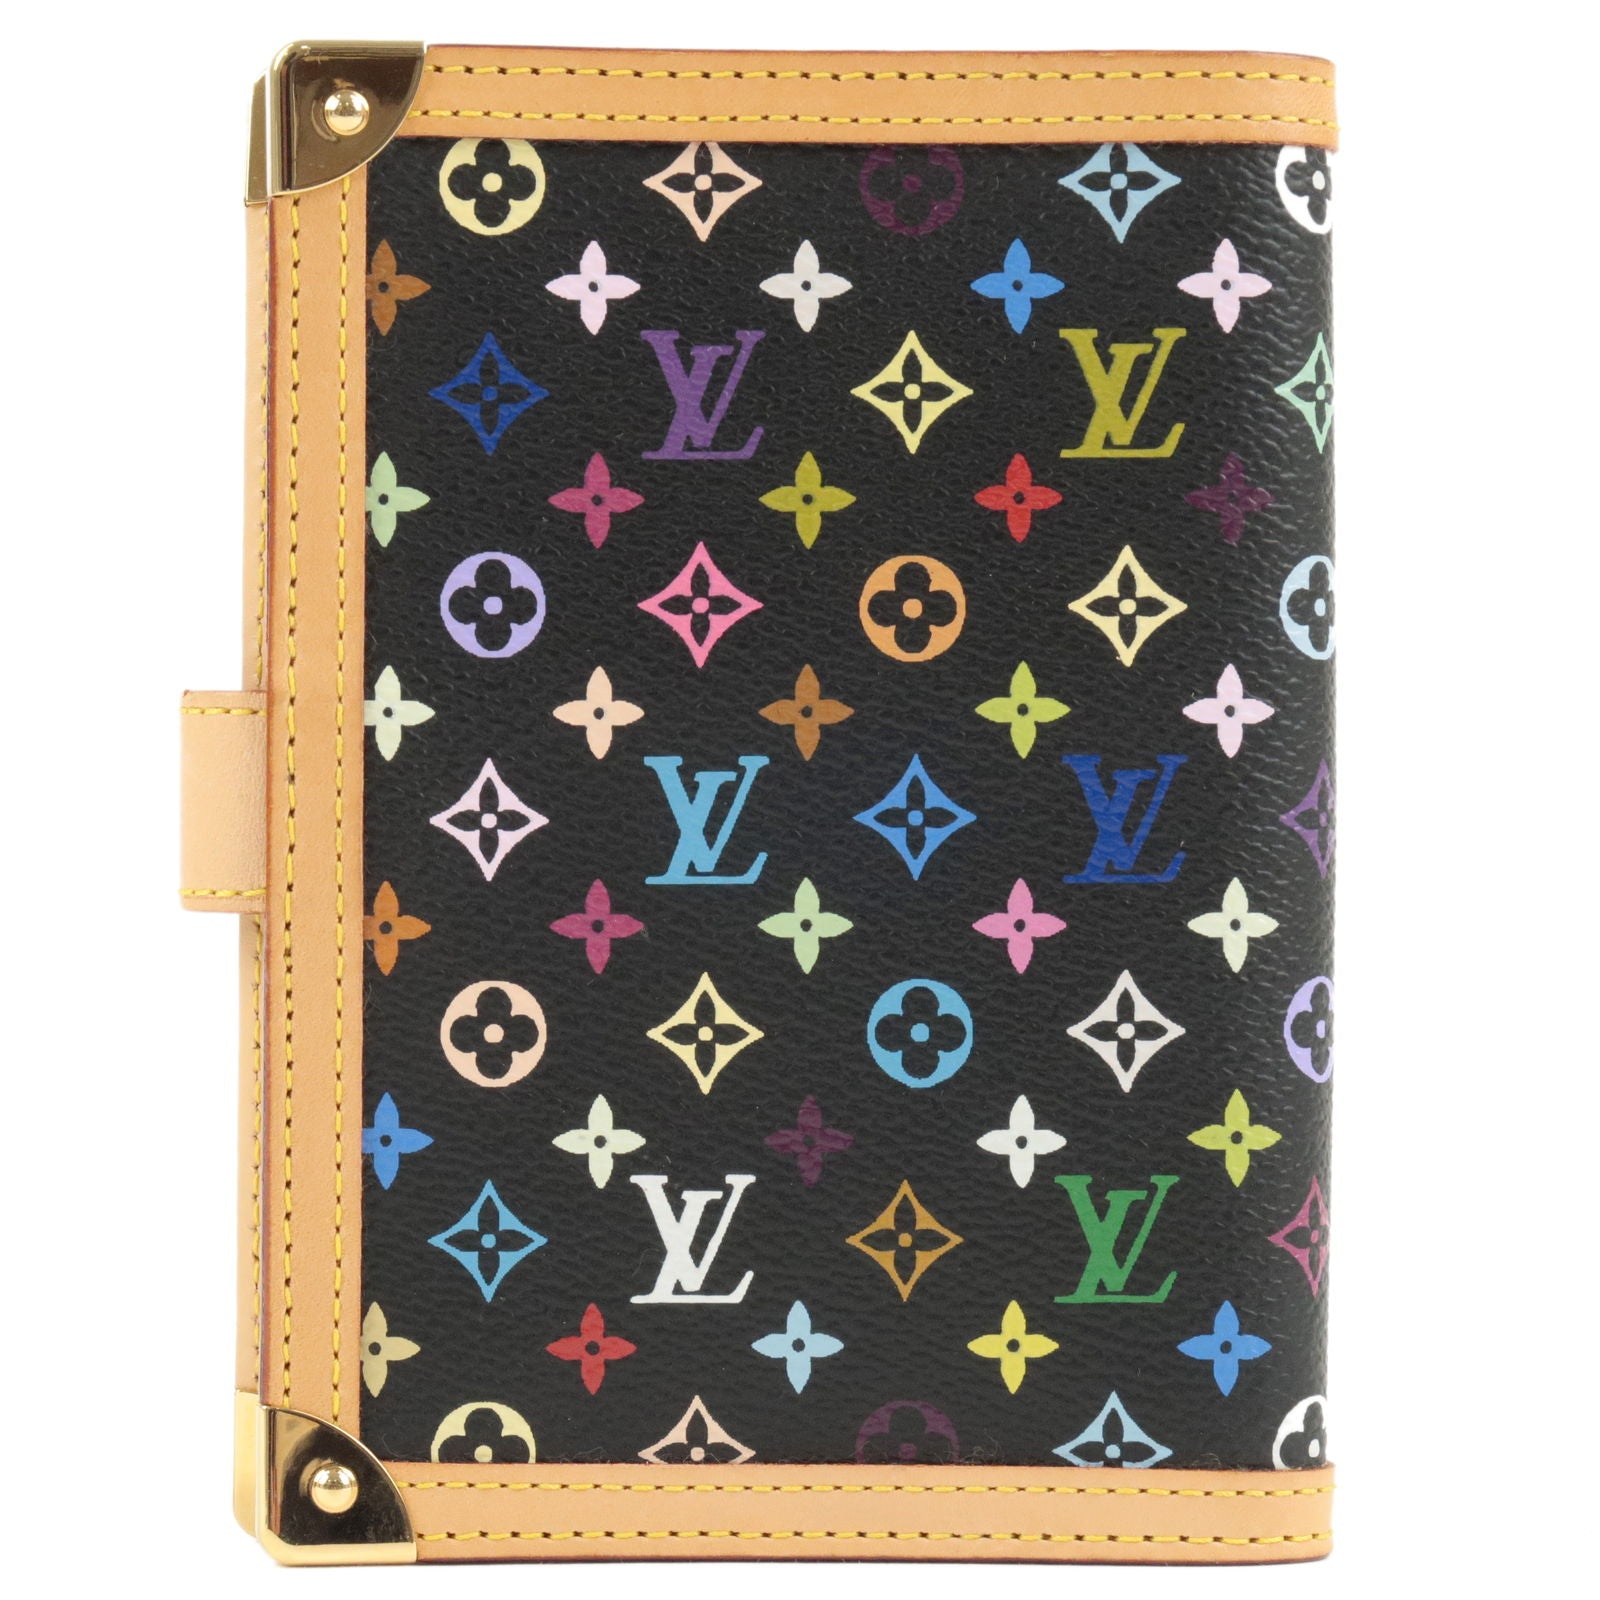 Authentic Louis Vuitton Agenda PM notebook cover Multicolor Black R20895